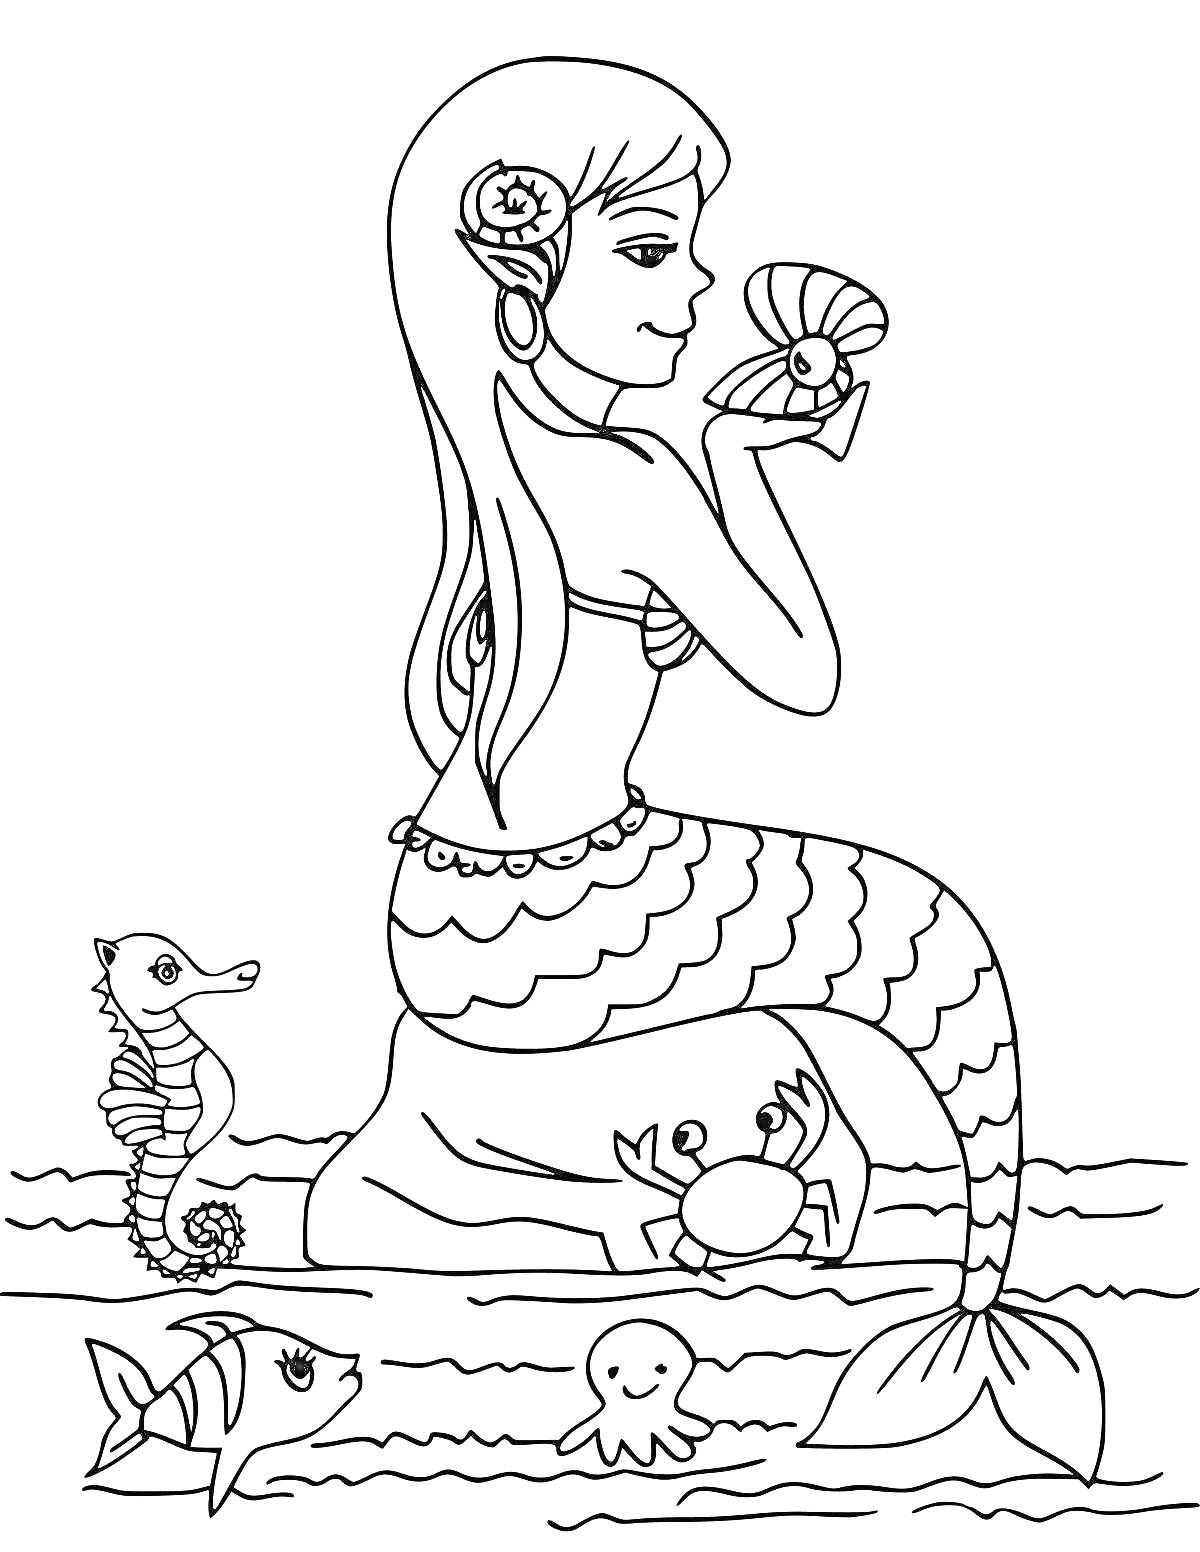 Раскраска Русалка с ракушкой, морской конёк, рыба, краб, осьминог